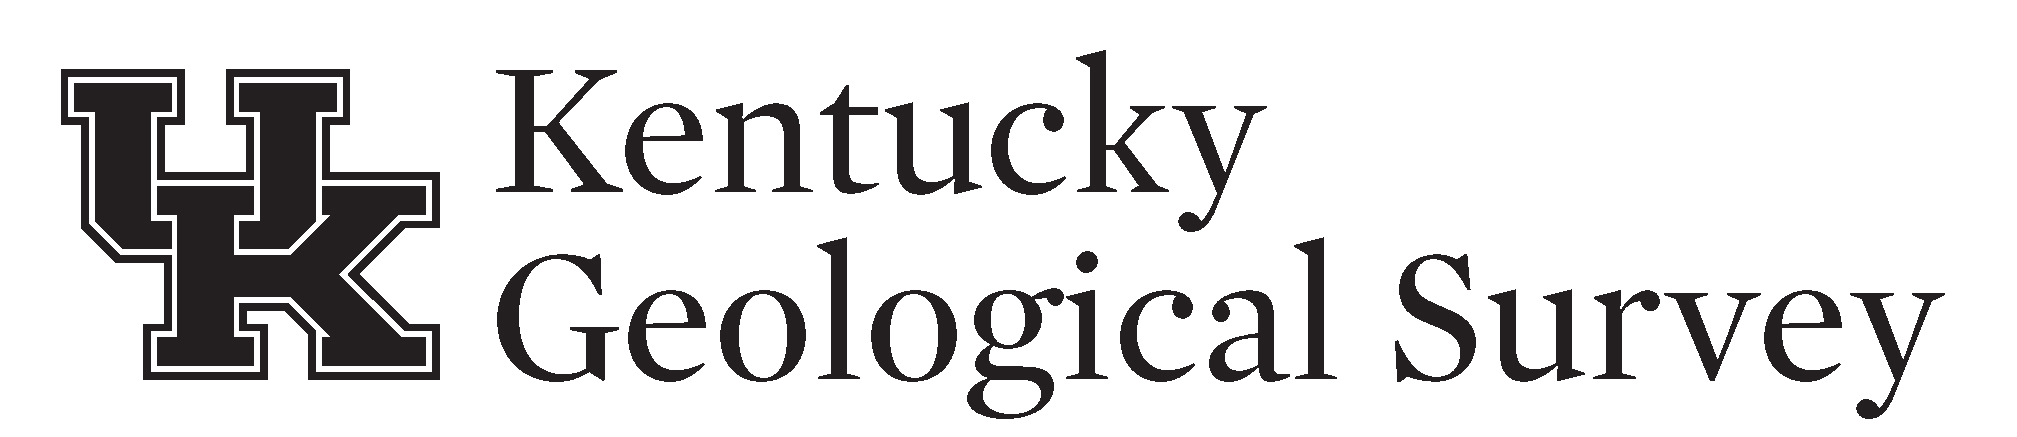 Kentucky Geological Survey-black.jpg